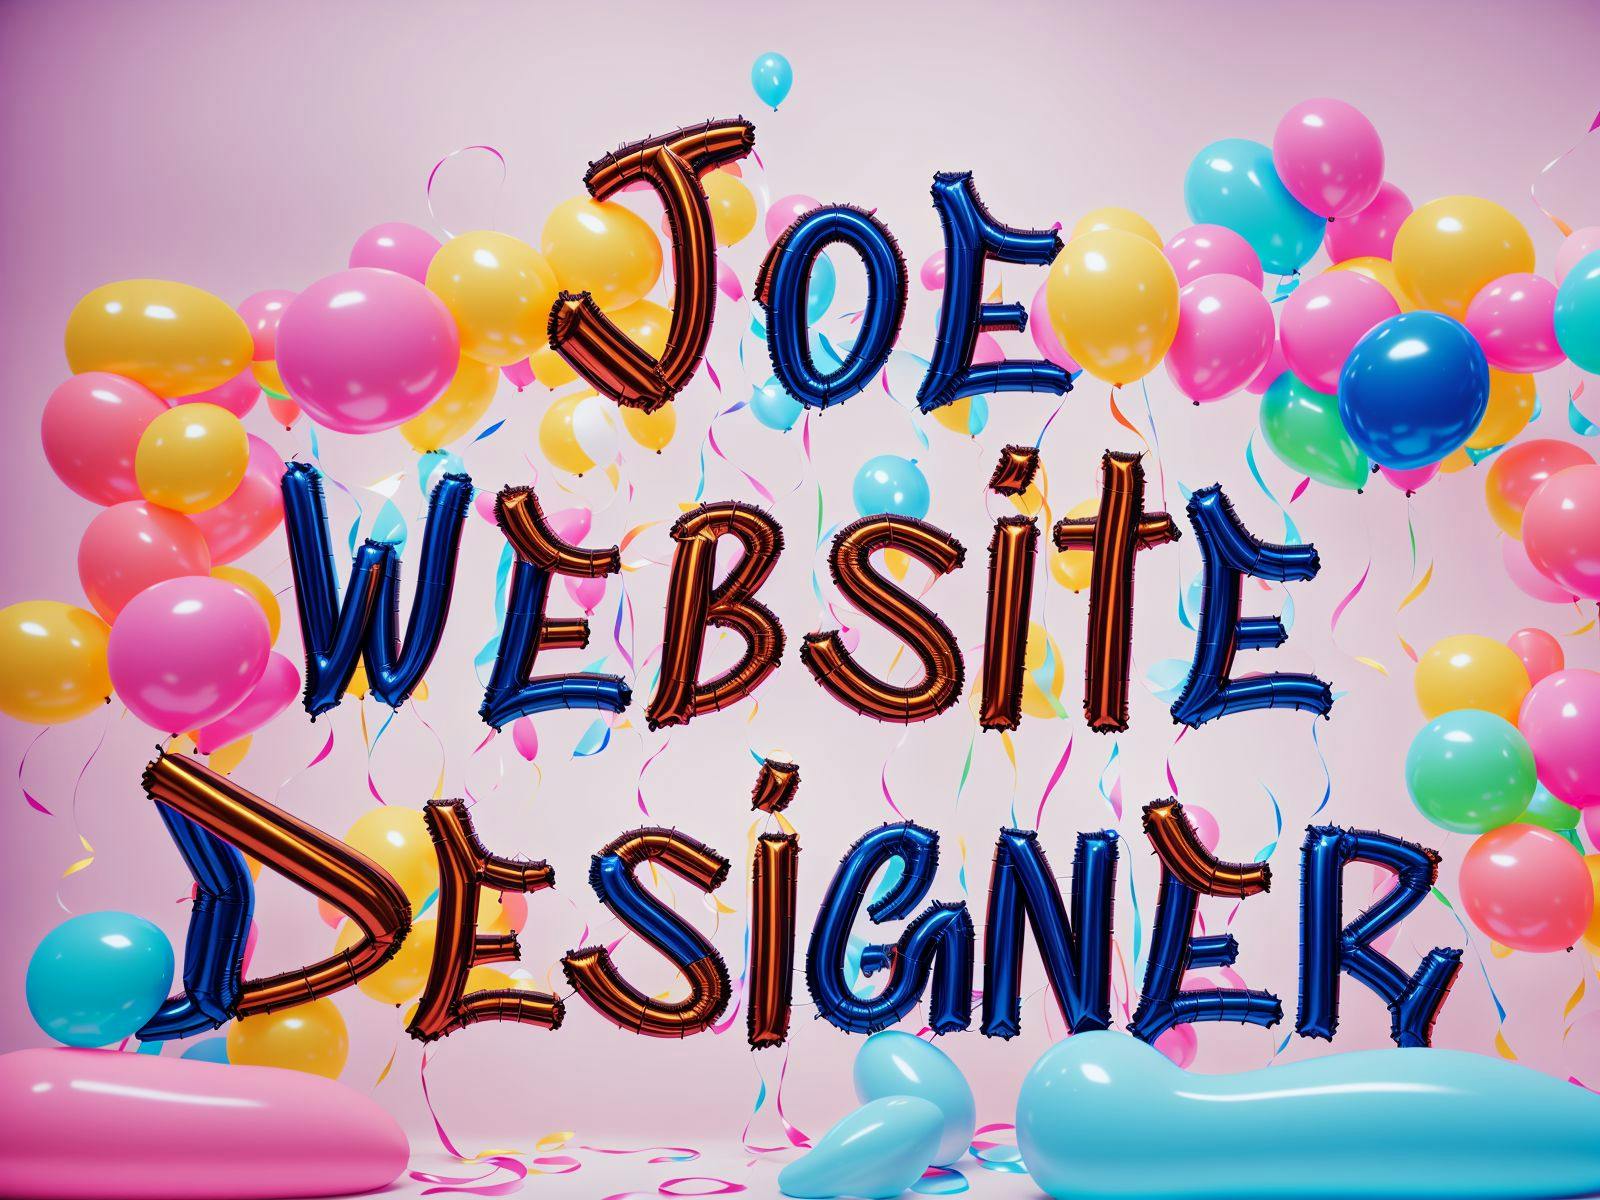 Joe - Website Designer